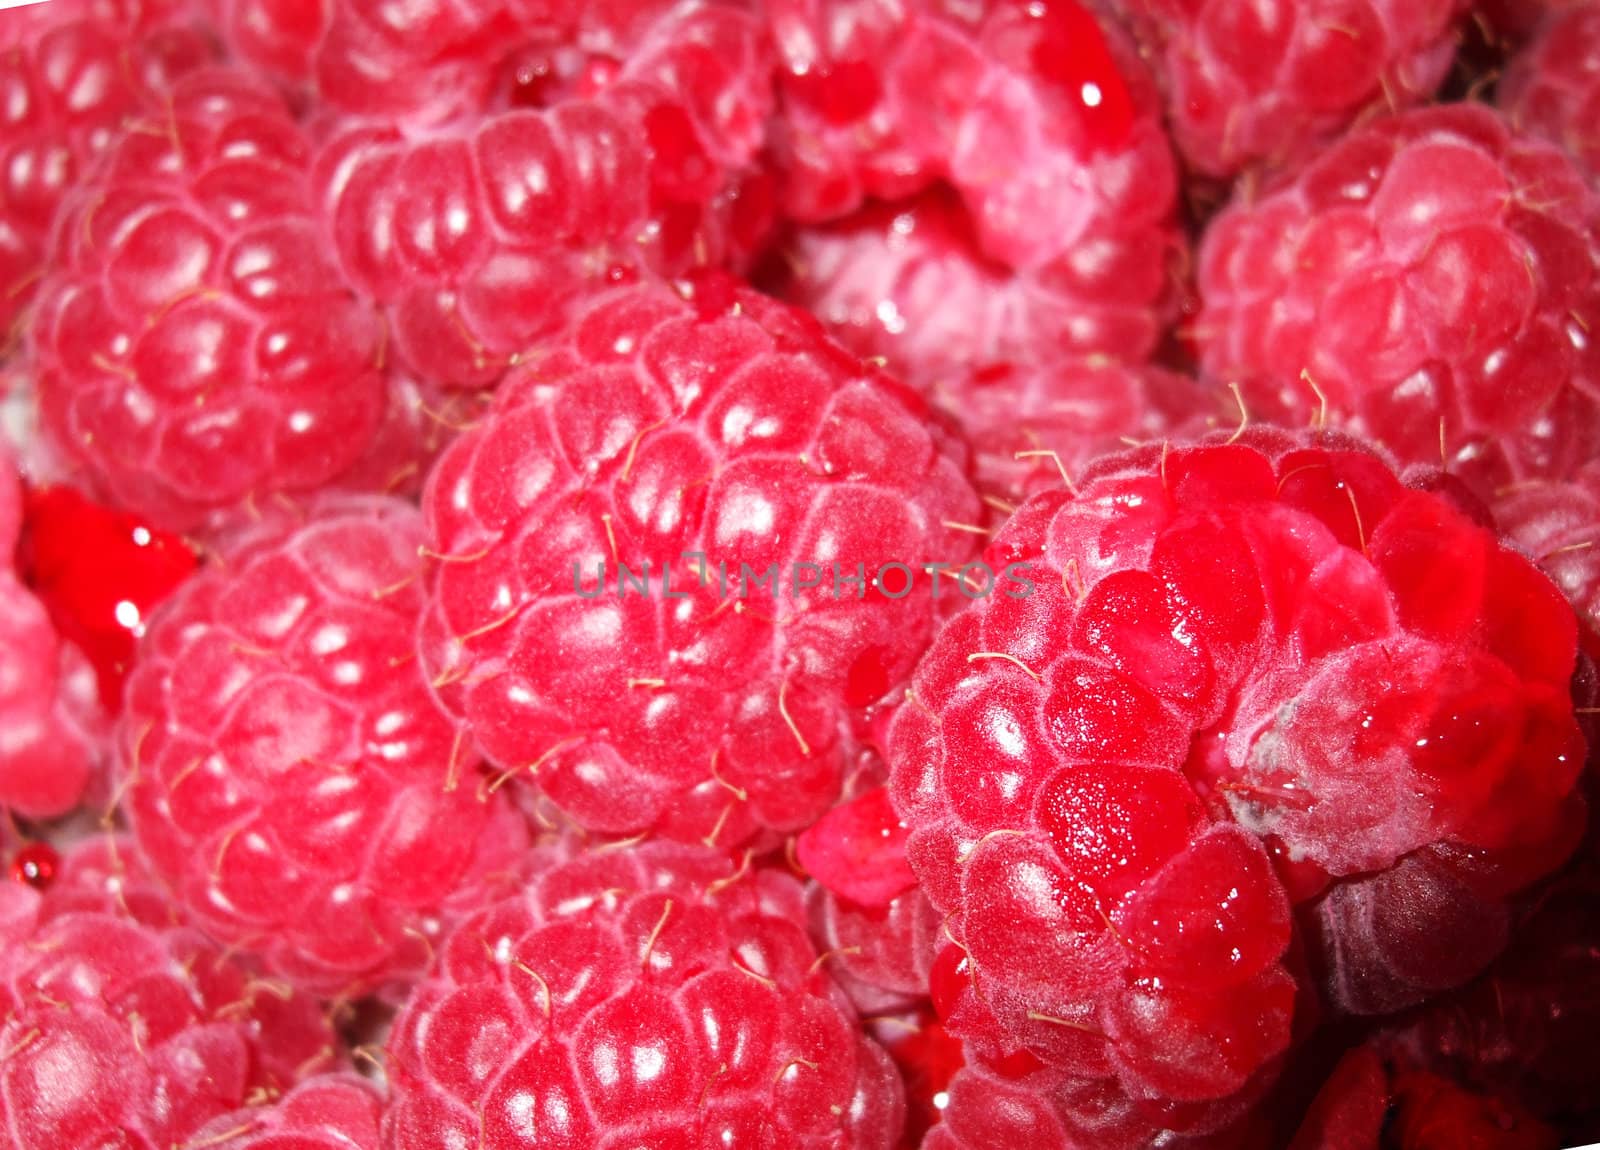 Raspberries by pwillitts